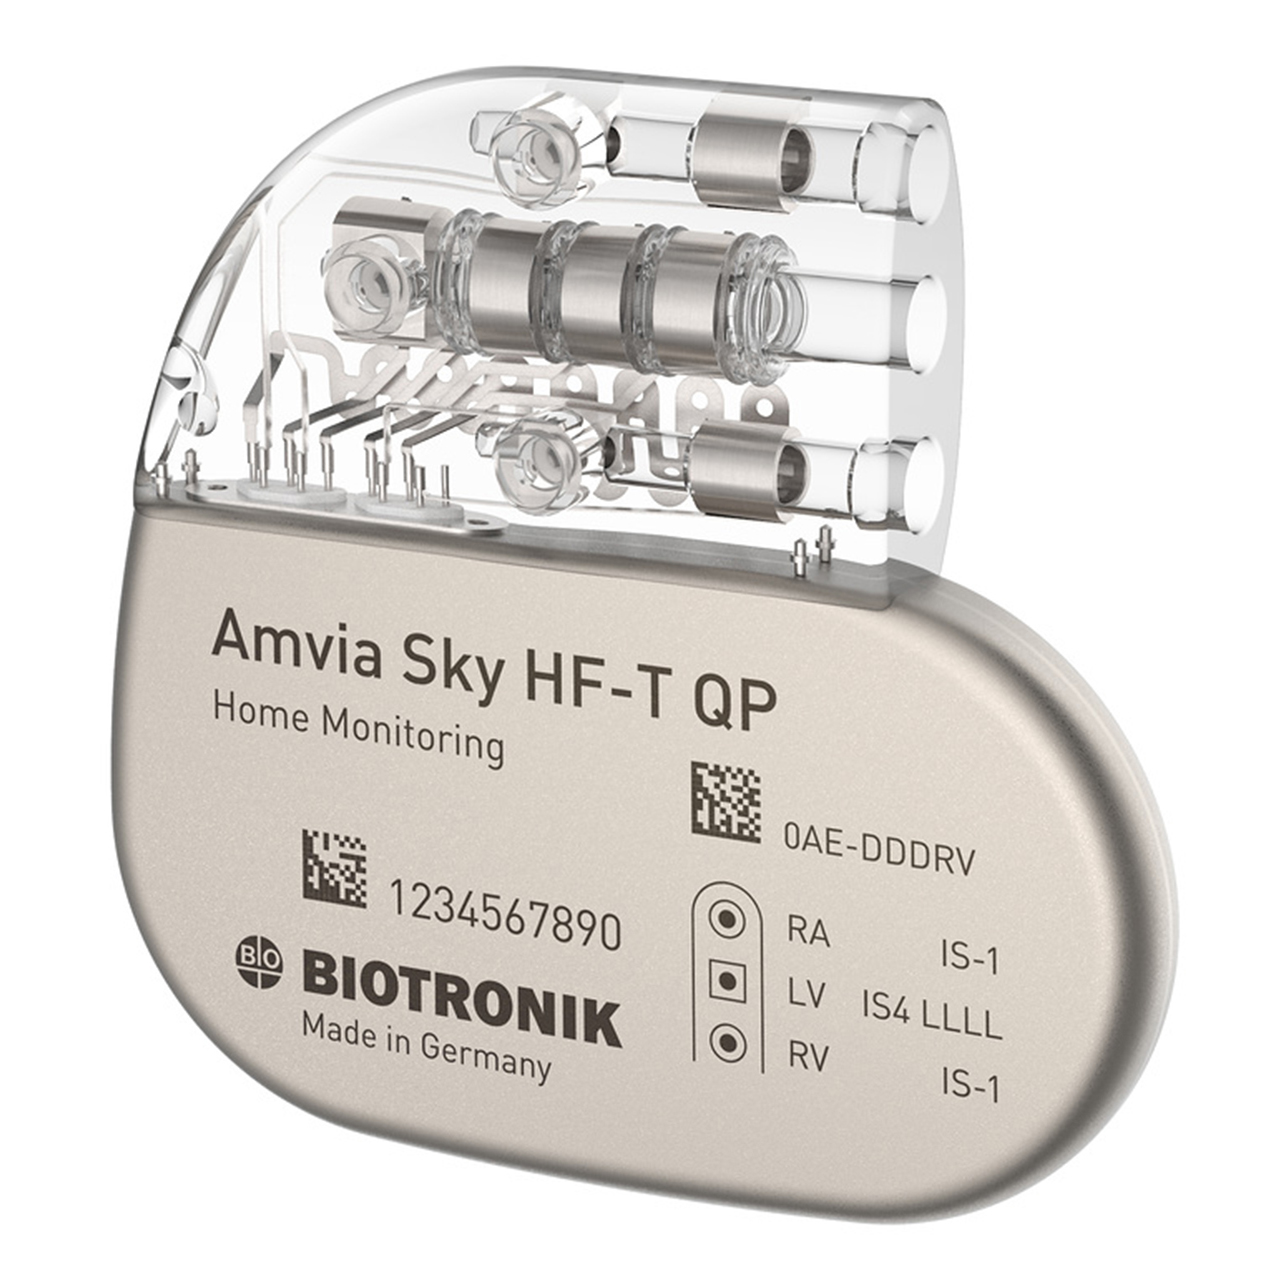 Amvia Sky HF-T QP CRT Pacemaker, at an angle